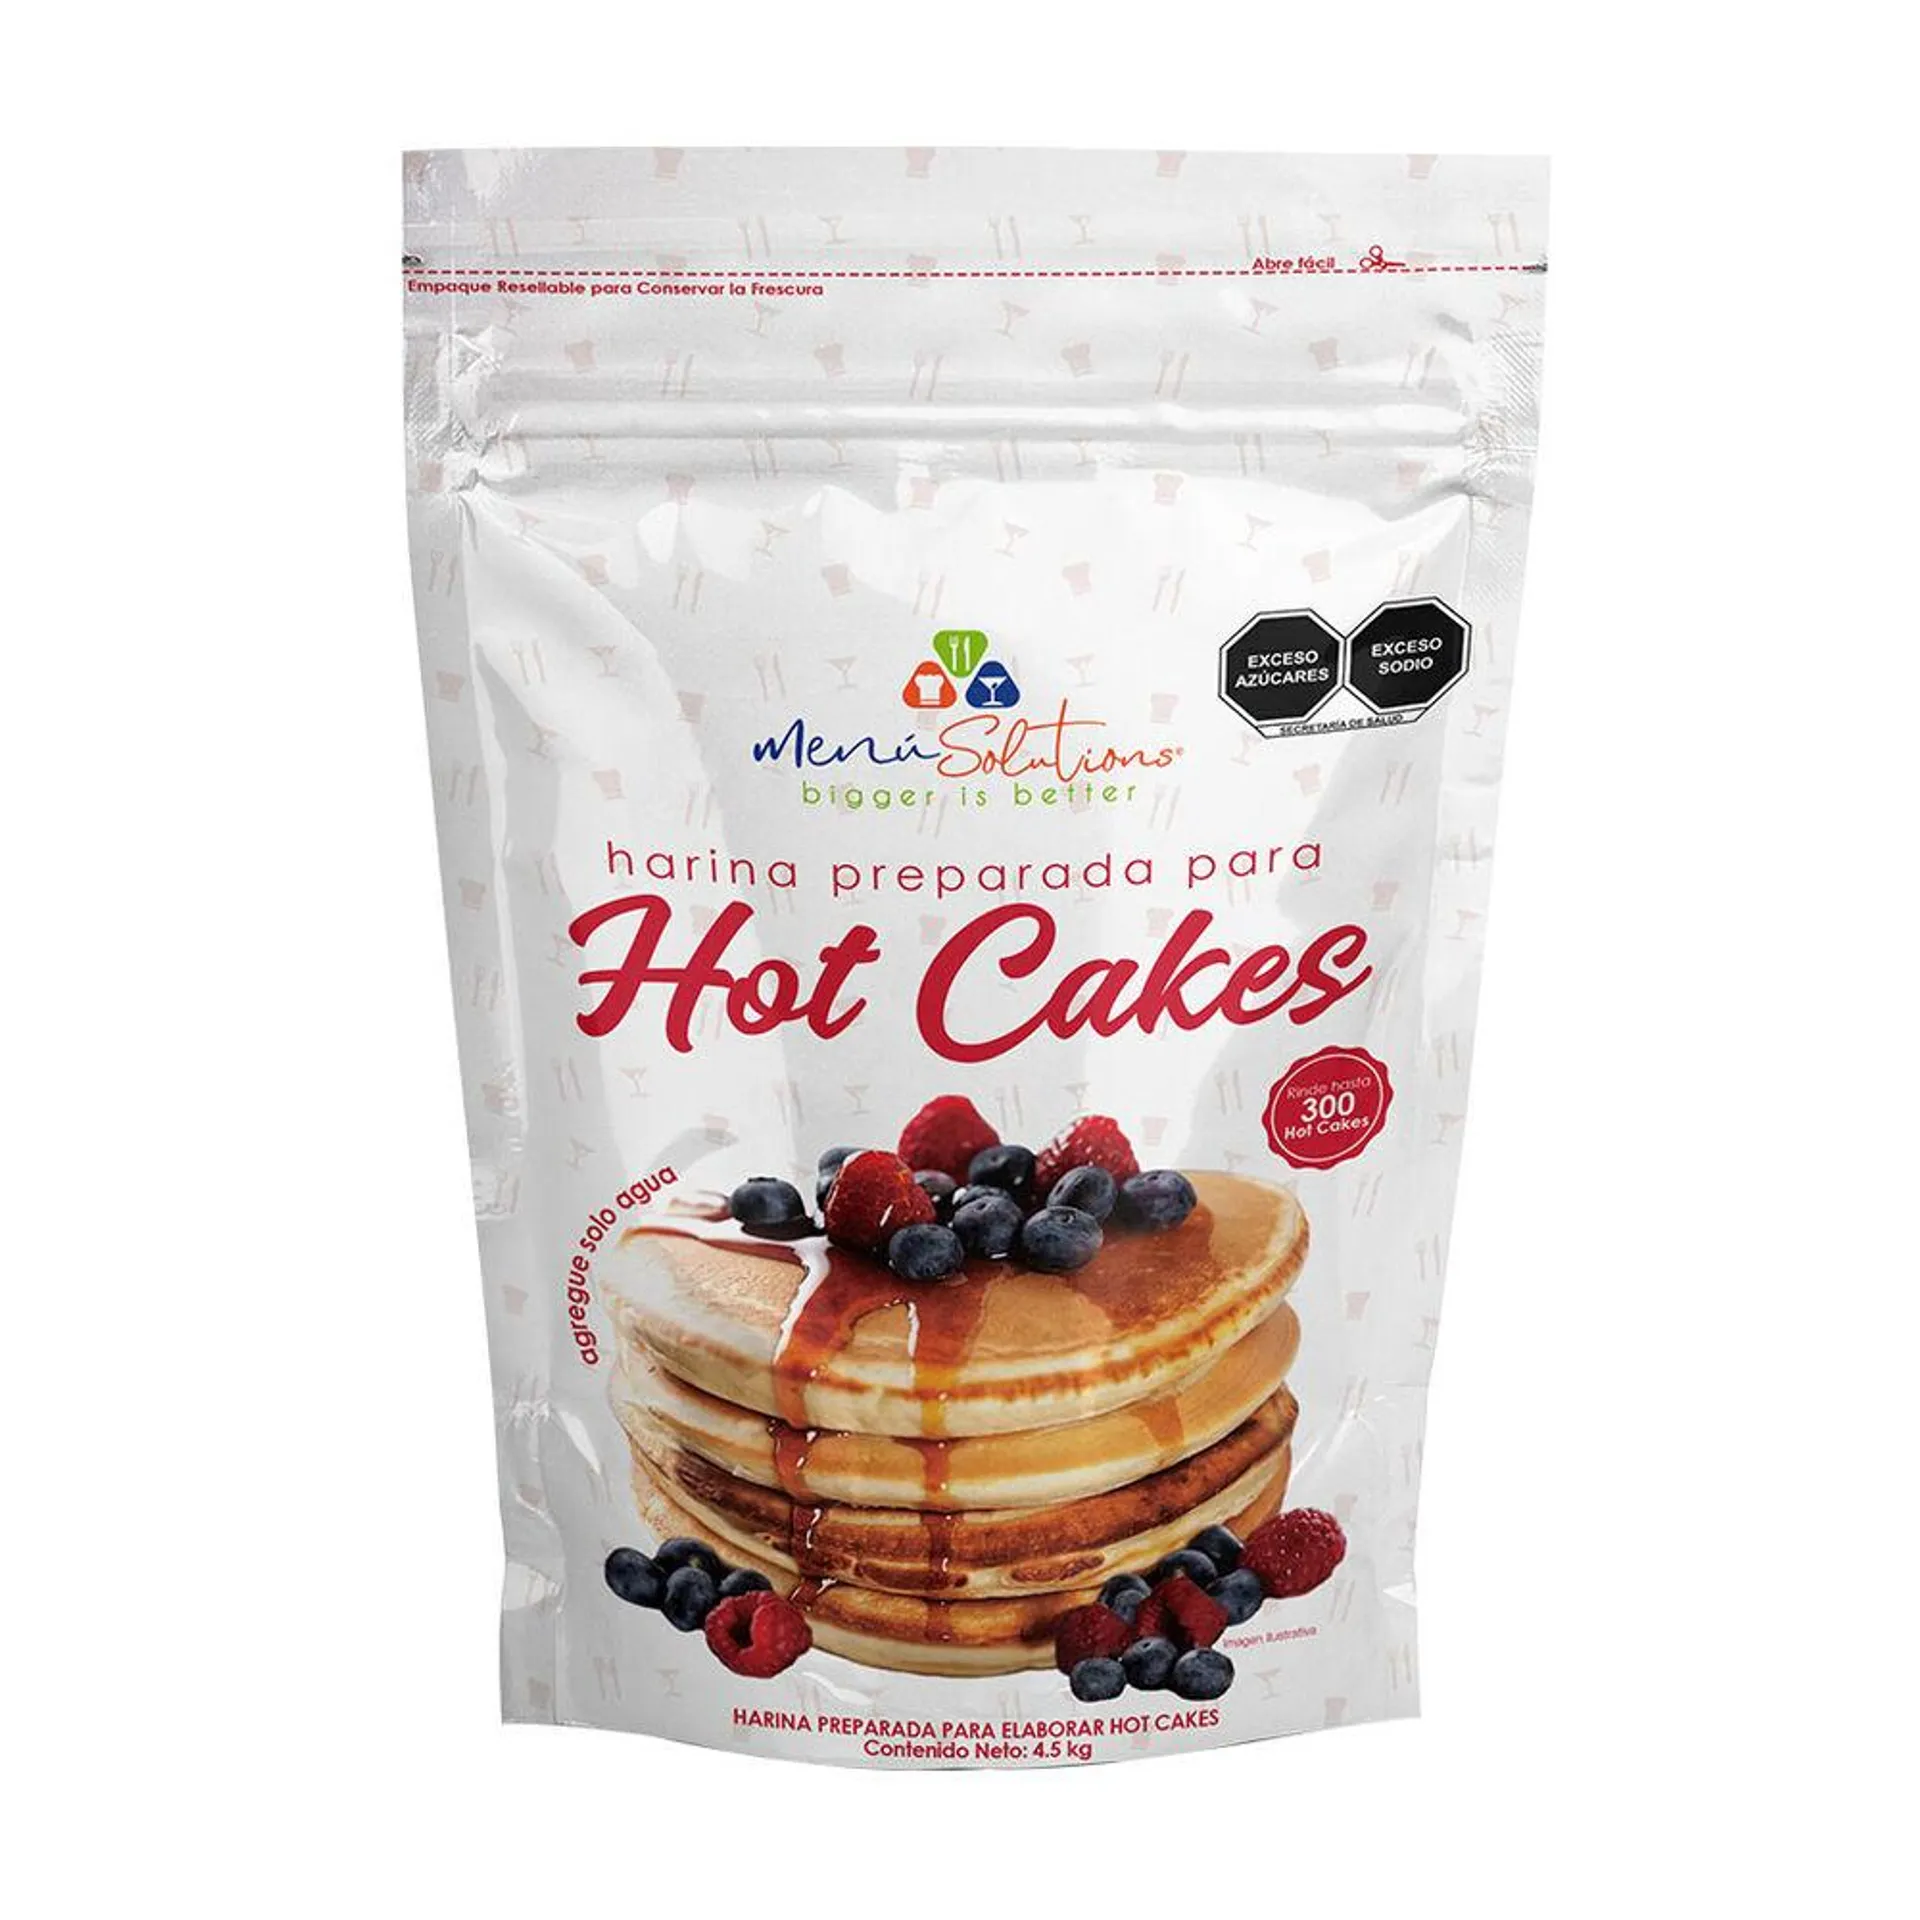 Harina para Hot Cakes Menú Solutions 4.5 Kg